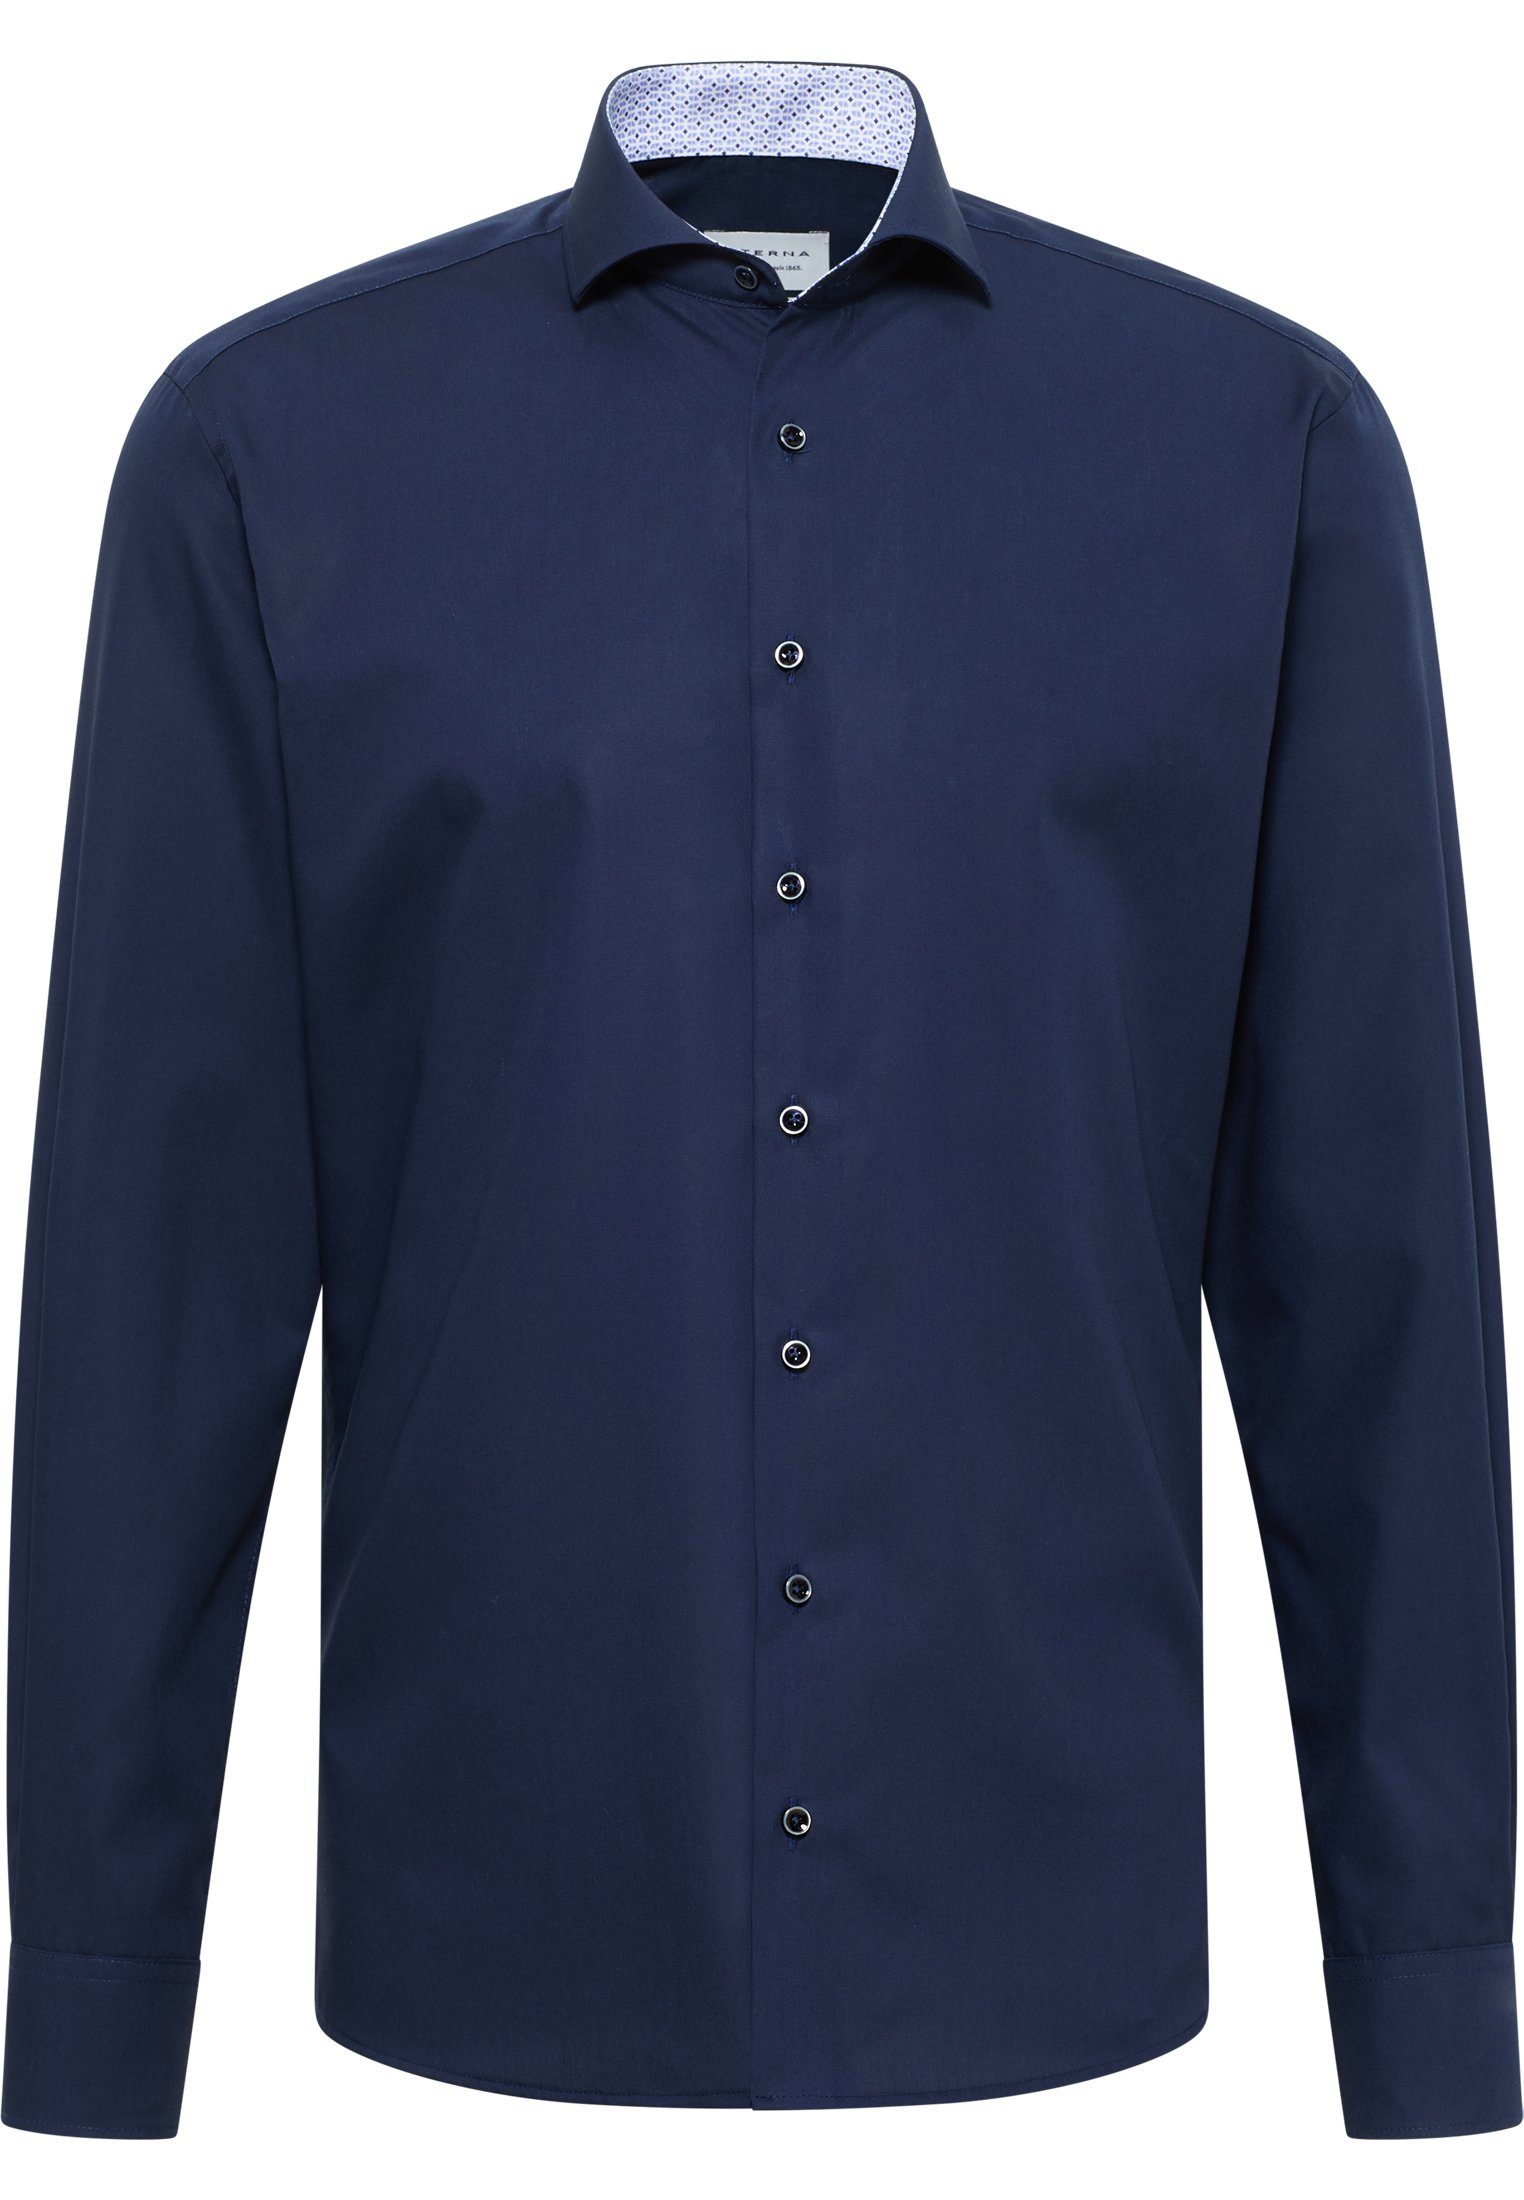 Original Langarm Shirt Blau Popeline Eterna Langarmhemd